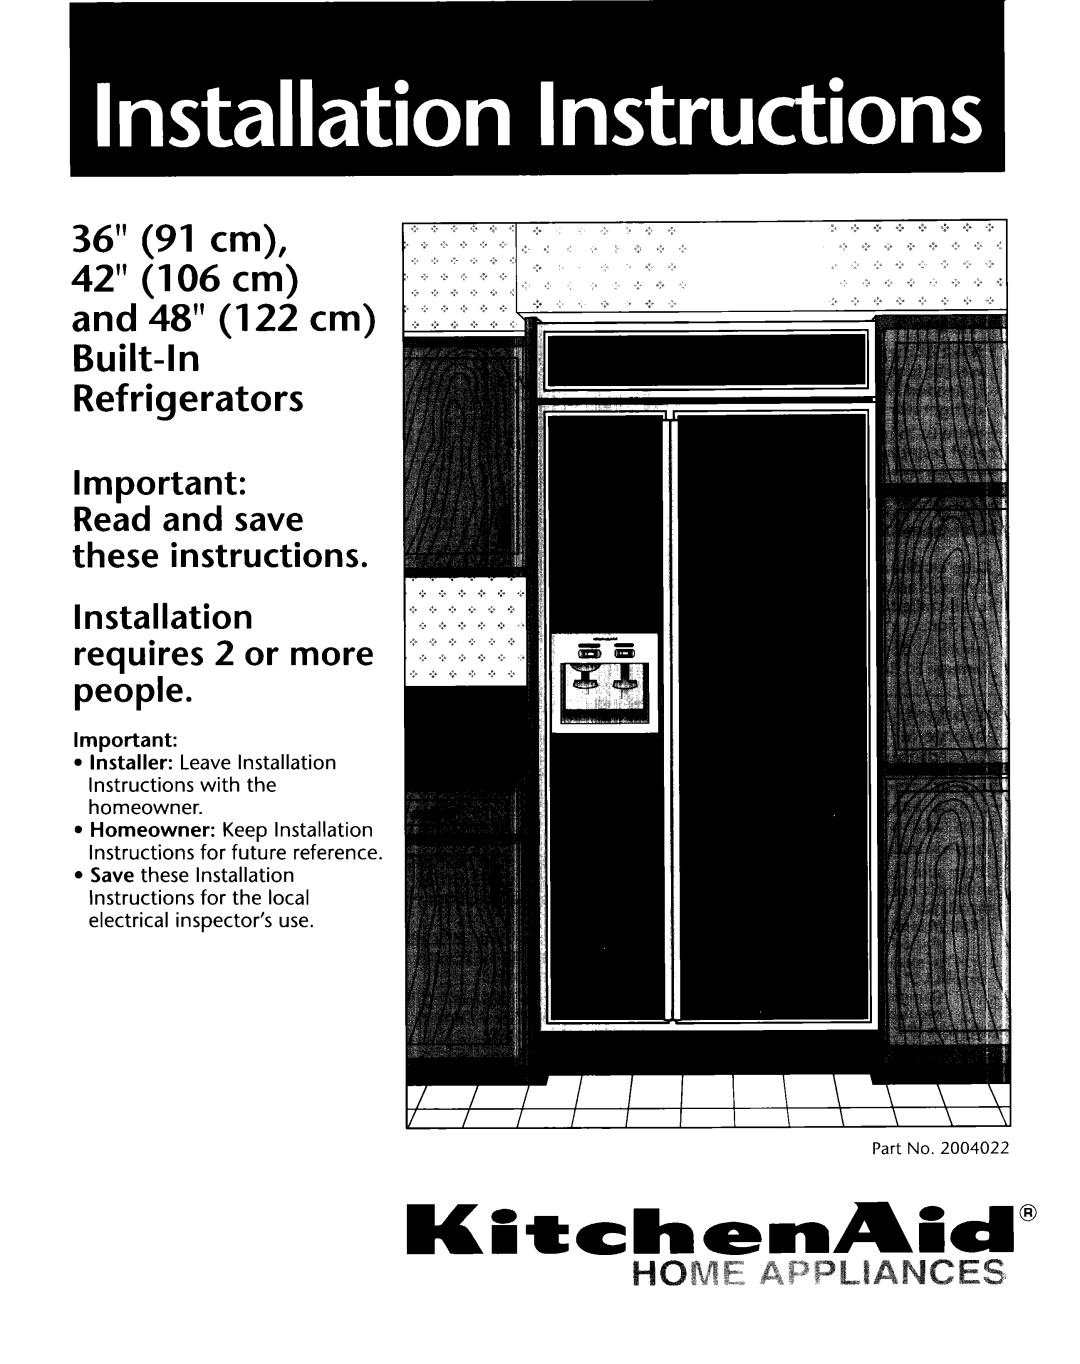 KitchenAid 2004022 installation instructions KitchenAPd”, 36” 91 cm, 42” 106 cm and 48” 122 cm Built-In Refrigerators 